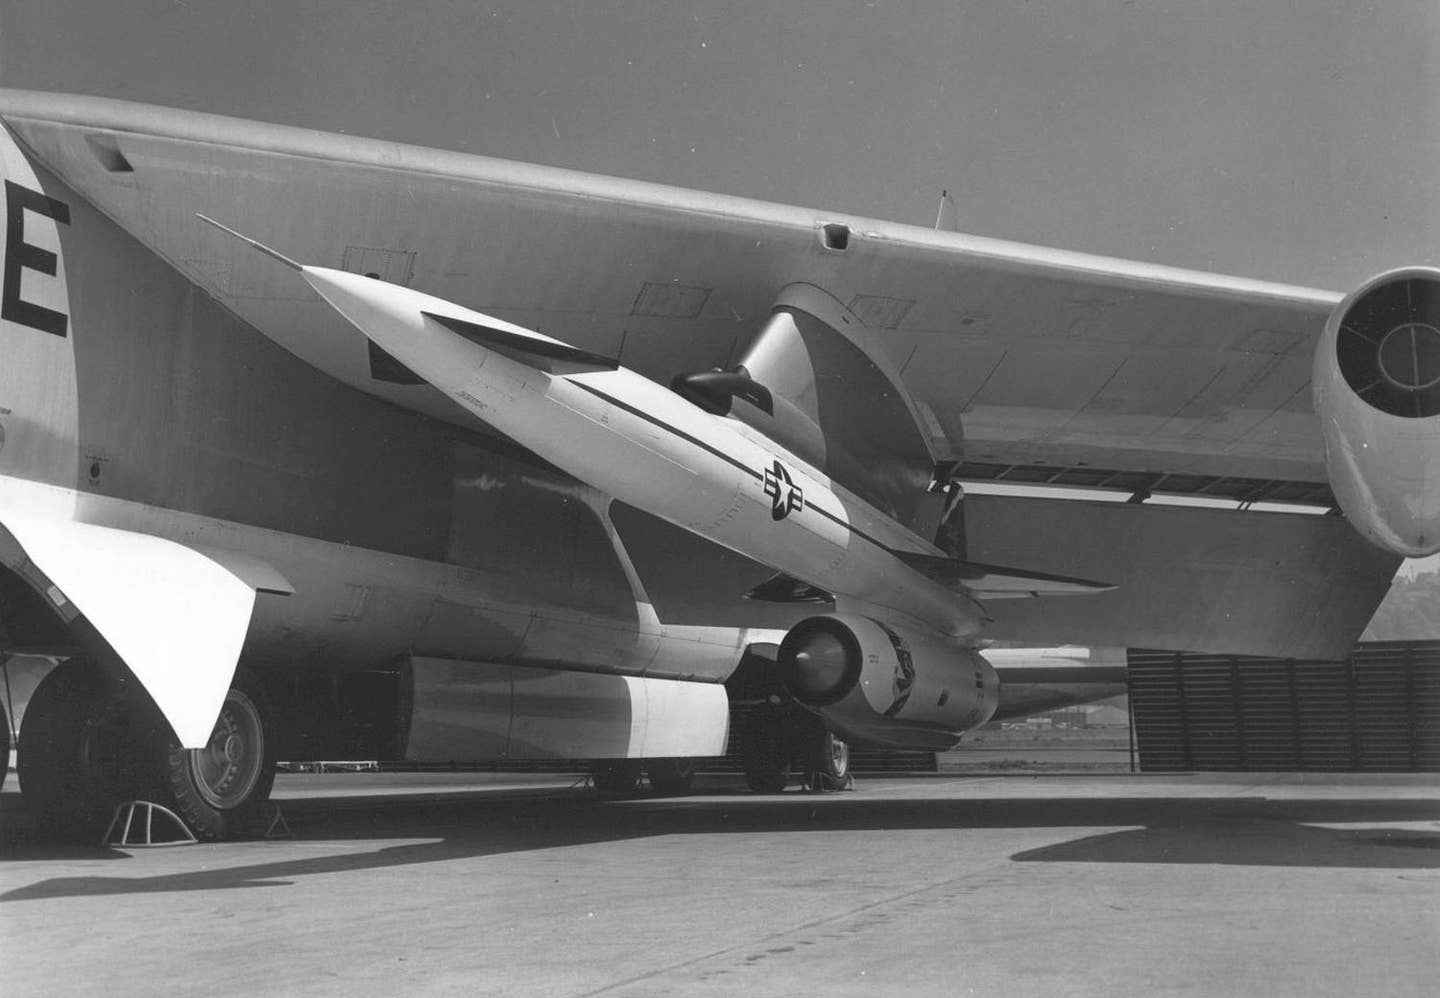 AGM-28 Hound Dog missile loaded on a B-52. (U.S. Air Force photo)